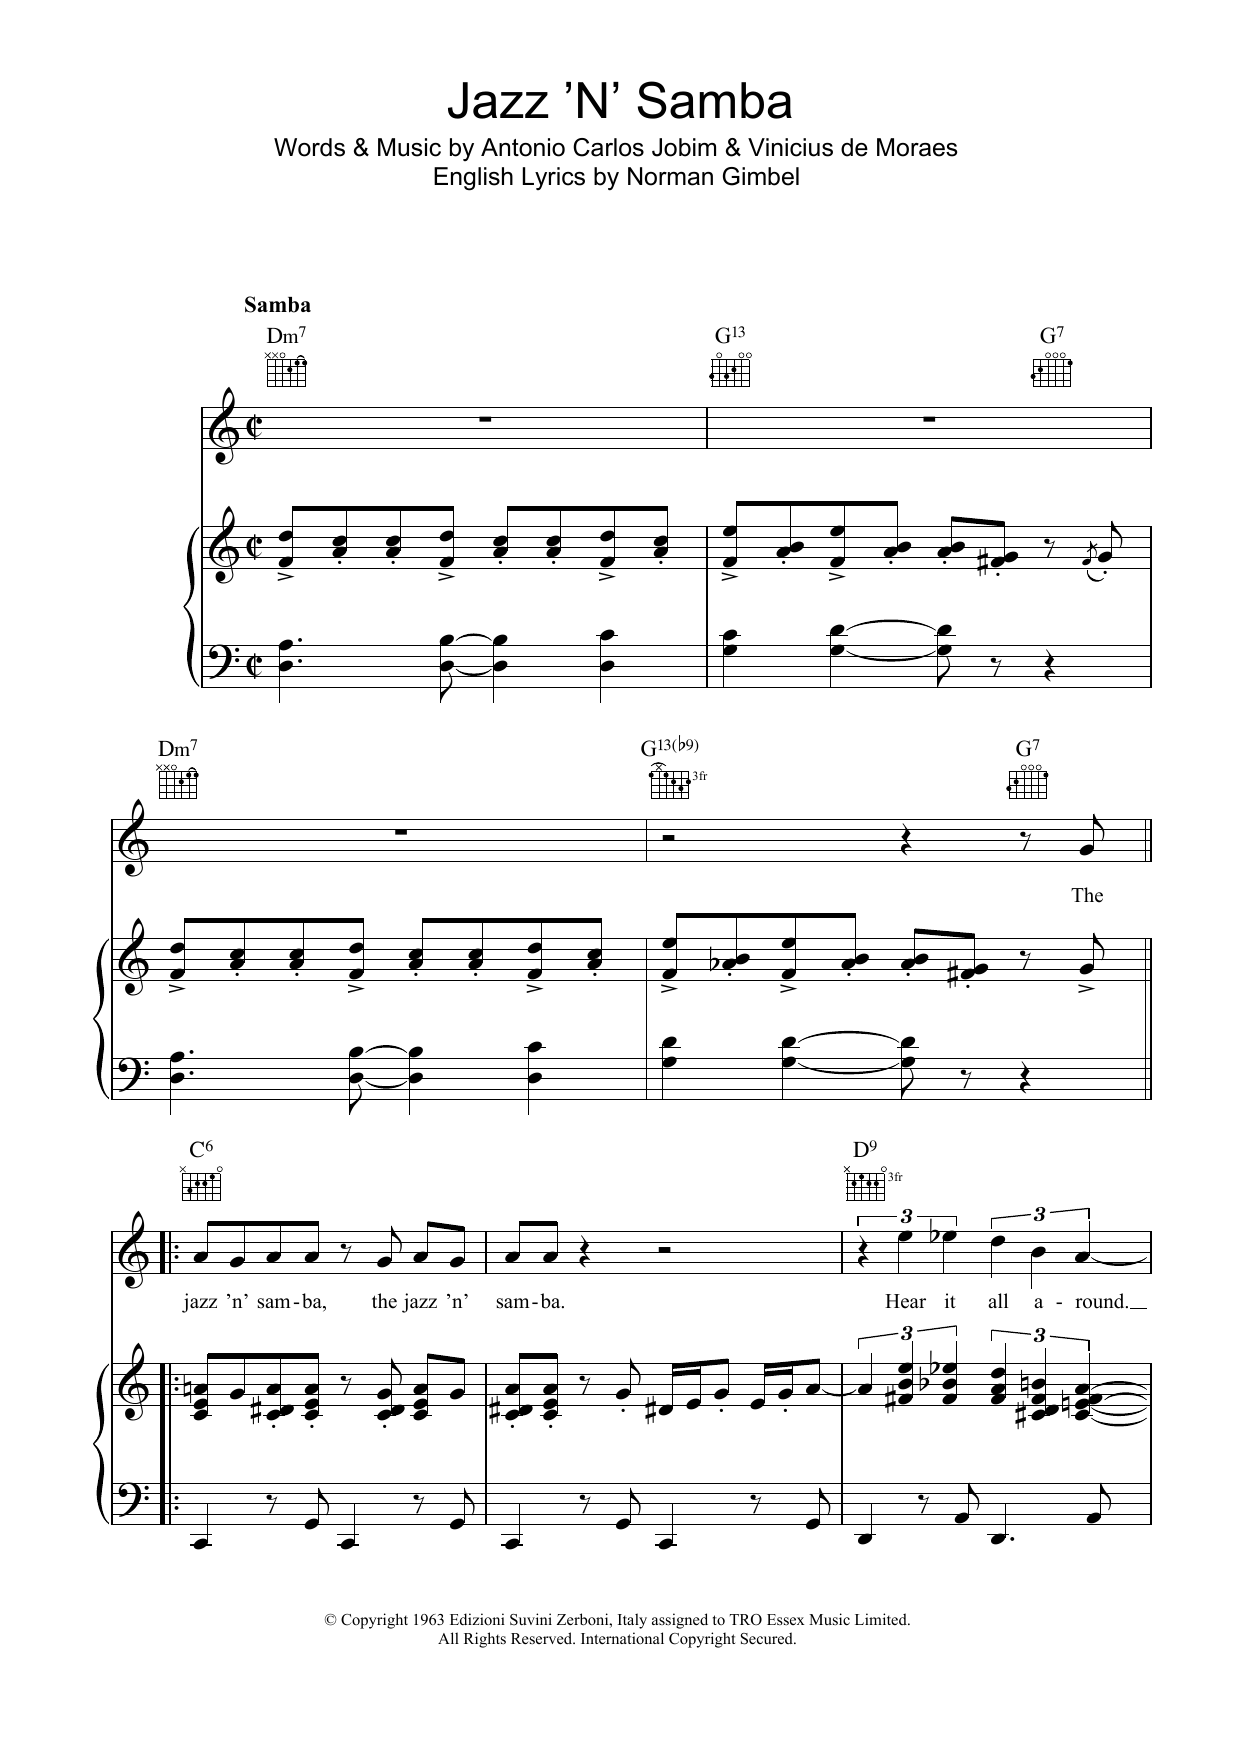 Download Antonio Carlos Jobim Jazz 'N' Samba (So Danco Samba) Sheet Music and learn how to play Piano, Vocal & Guitar (Right-Hand Melody) PDF digital score in minutes